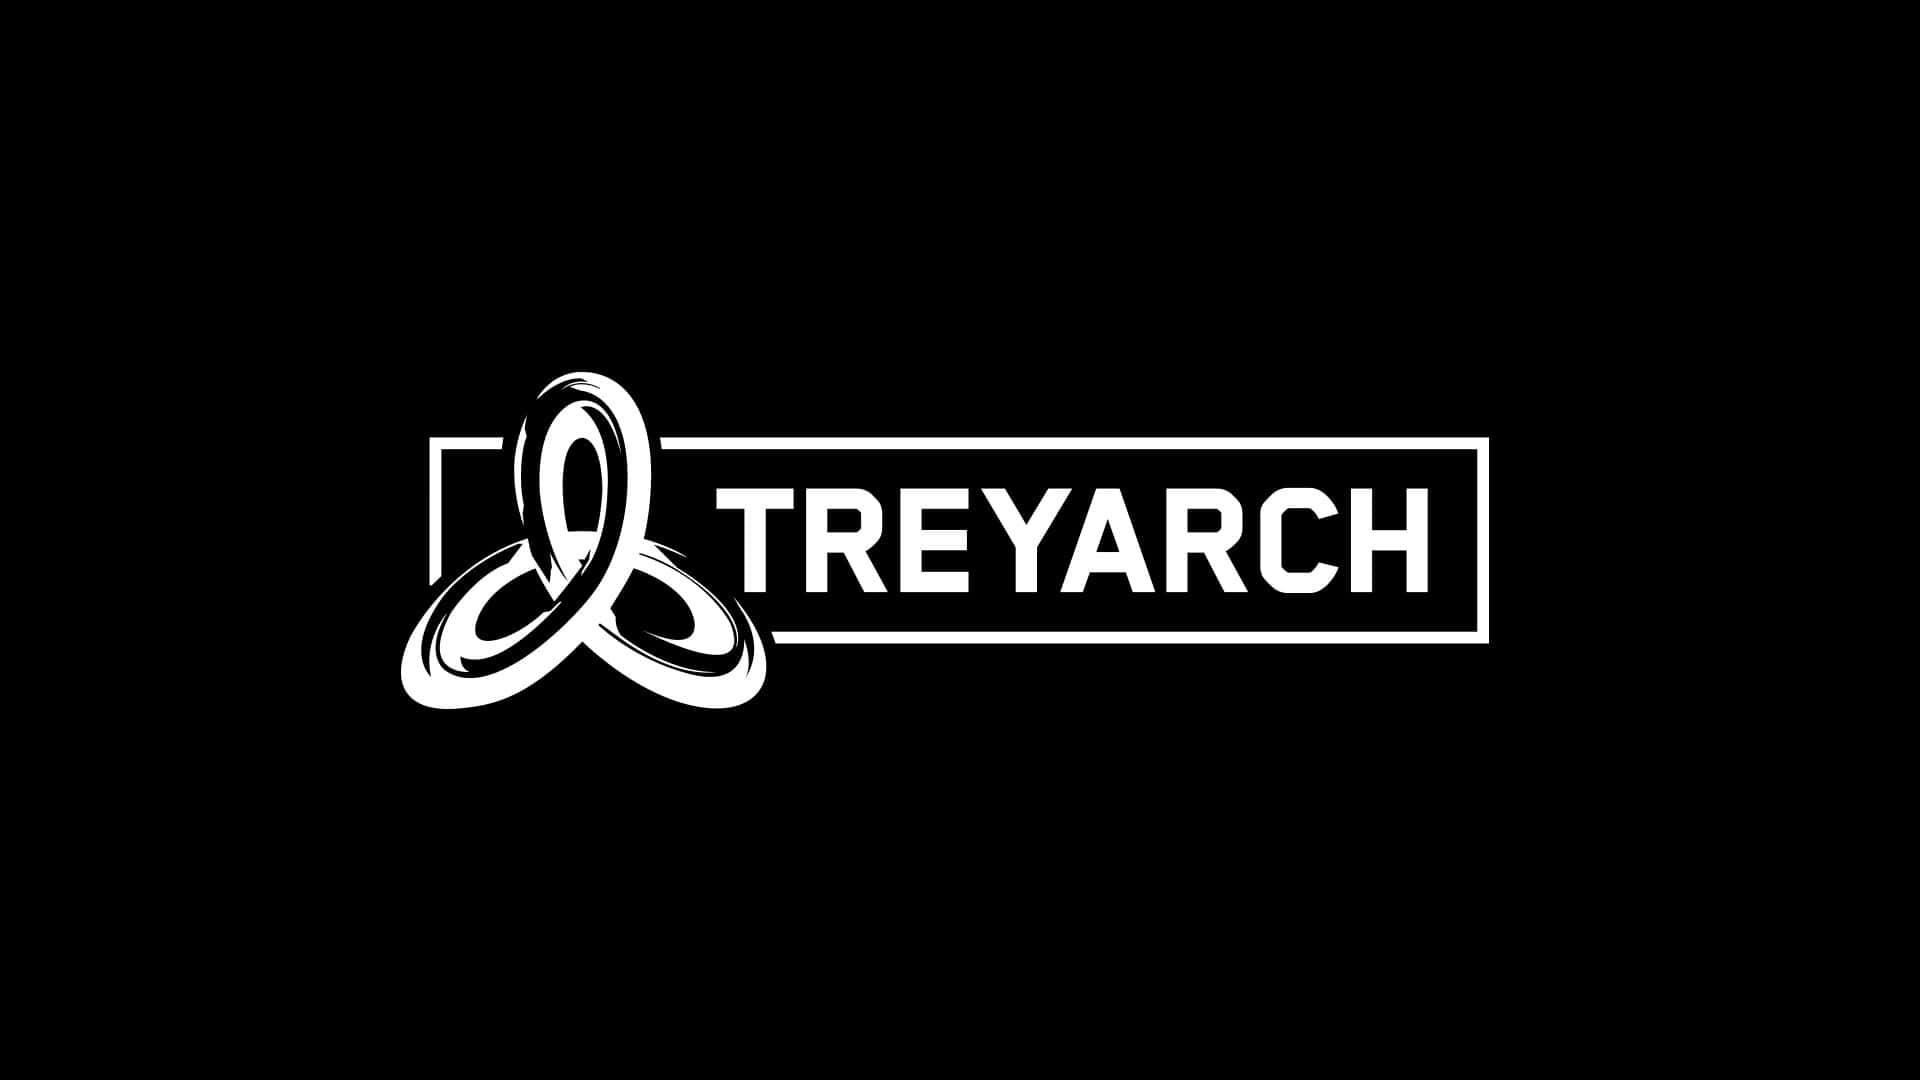 Treyarch logo on Professional Gaming Background Wallpaper